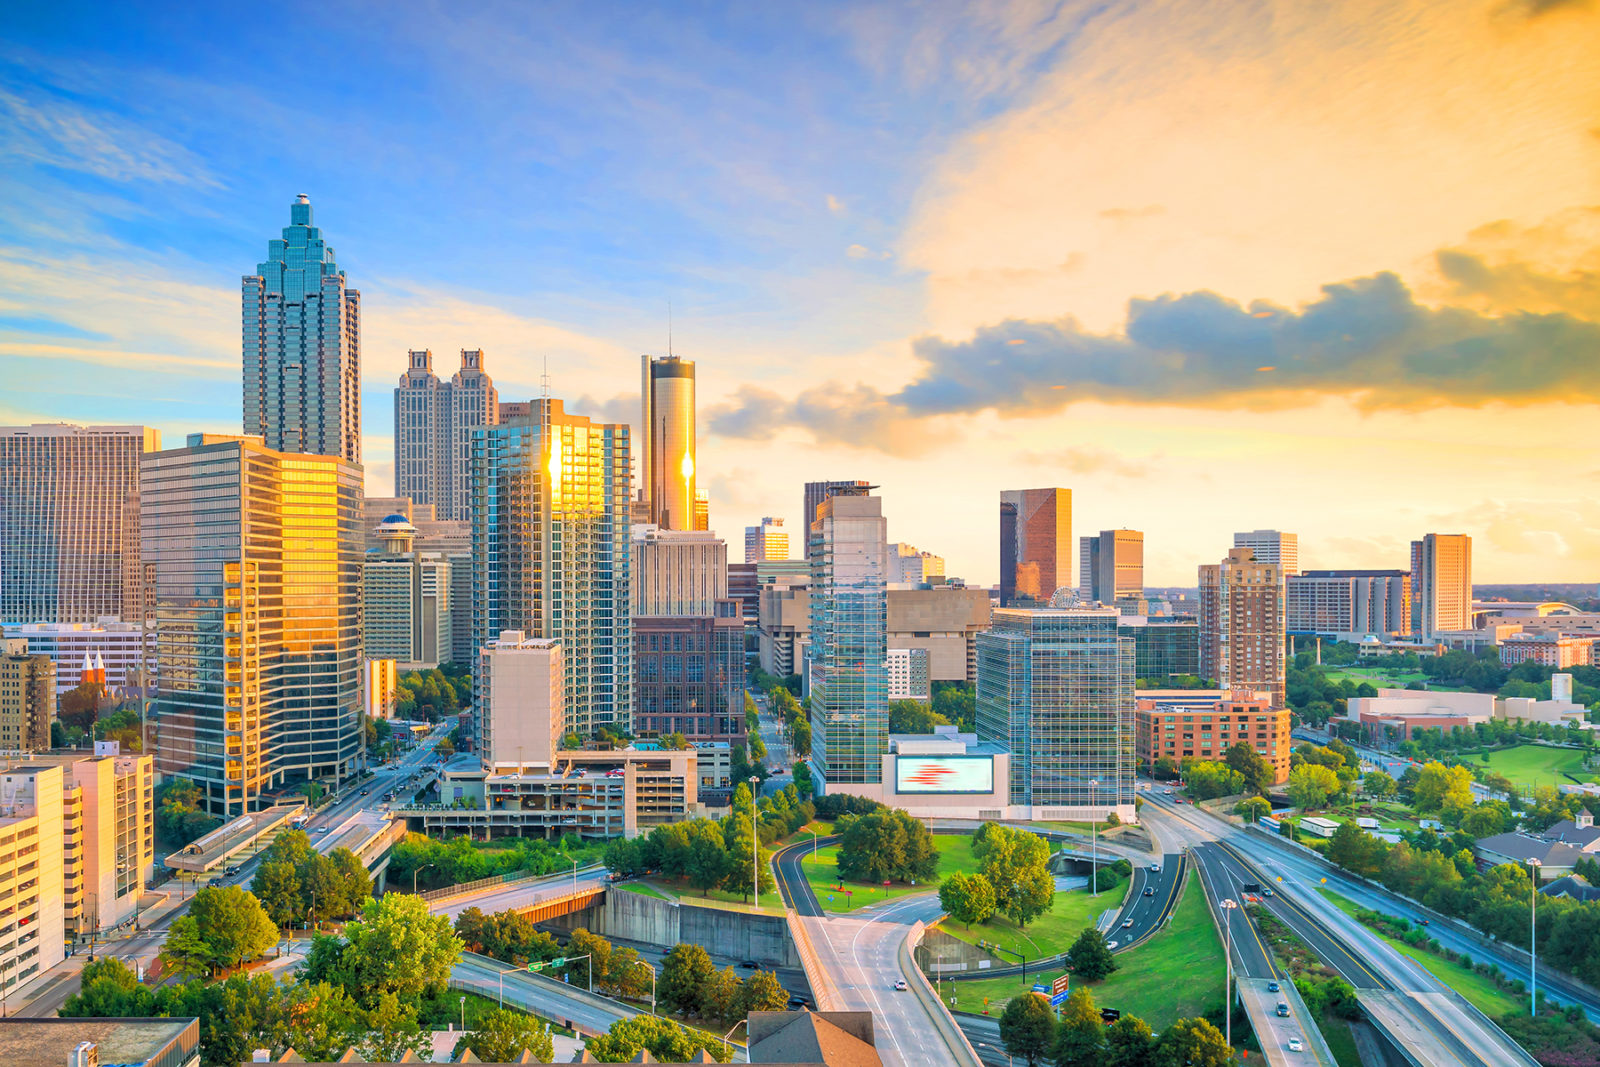 Image of the city of Atlanta, GA